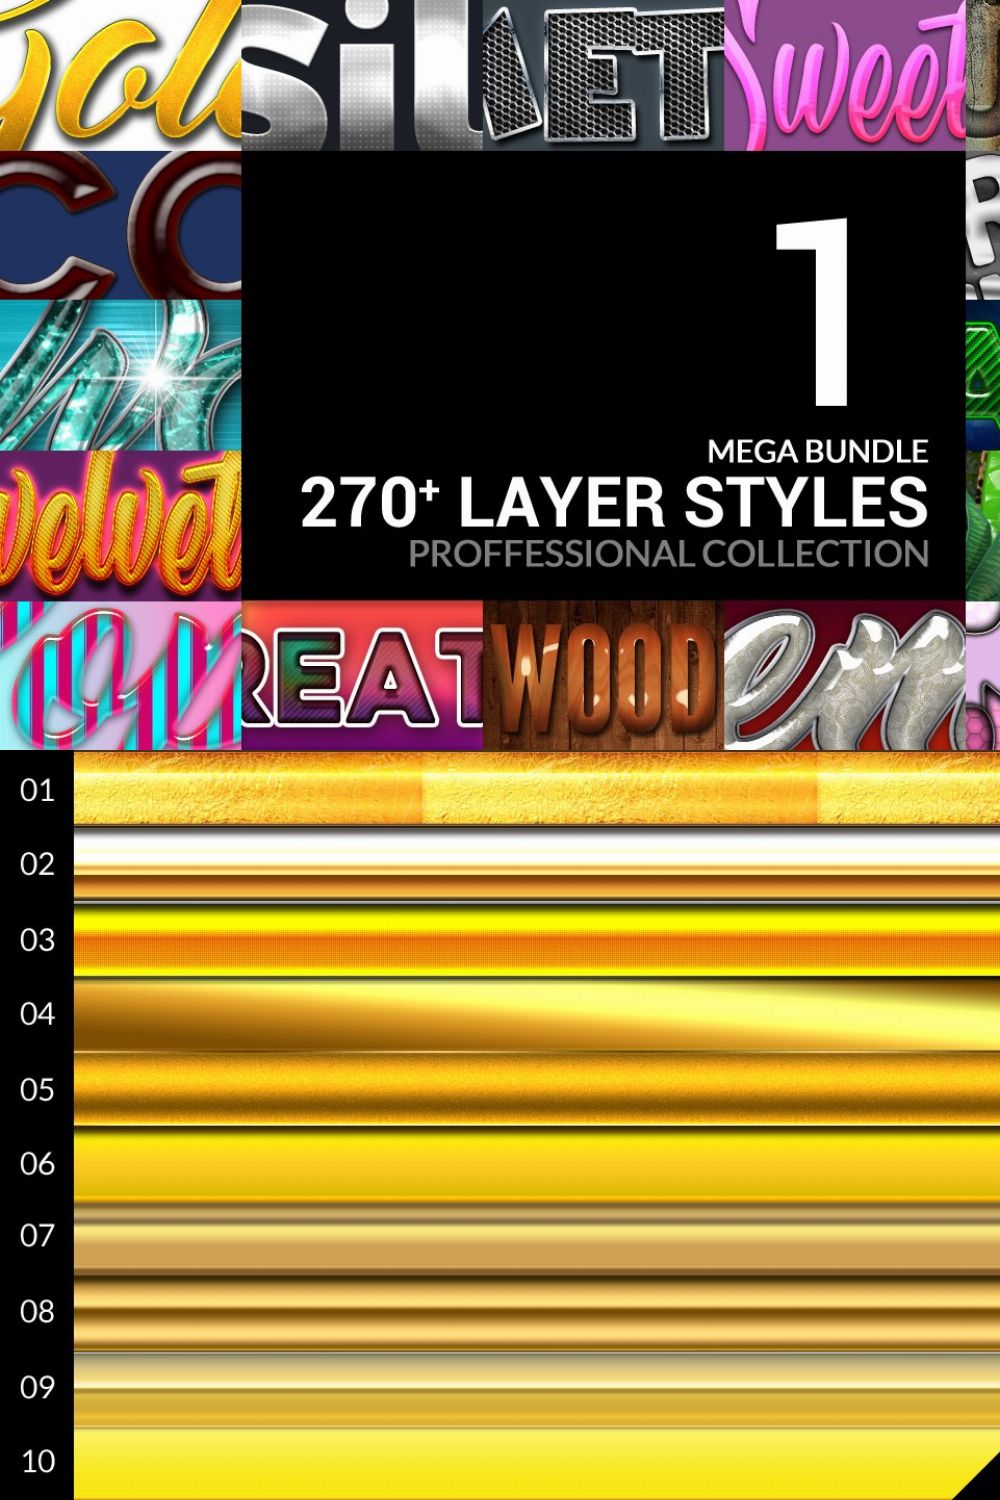 270+ Layer Styles Mega Bundle Vol.1 pinterest preview image.